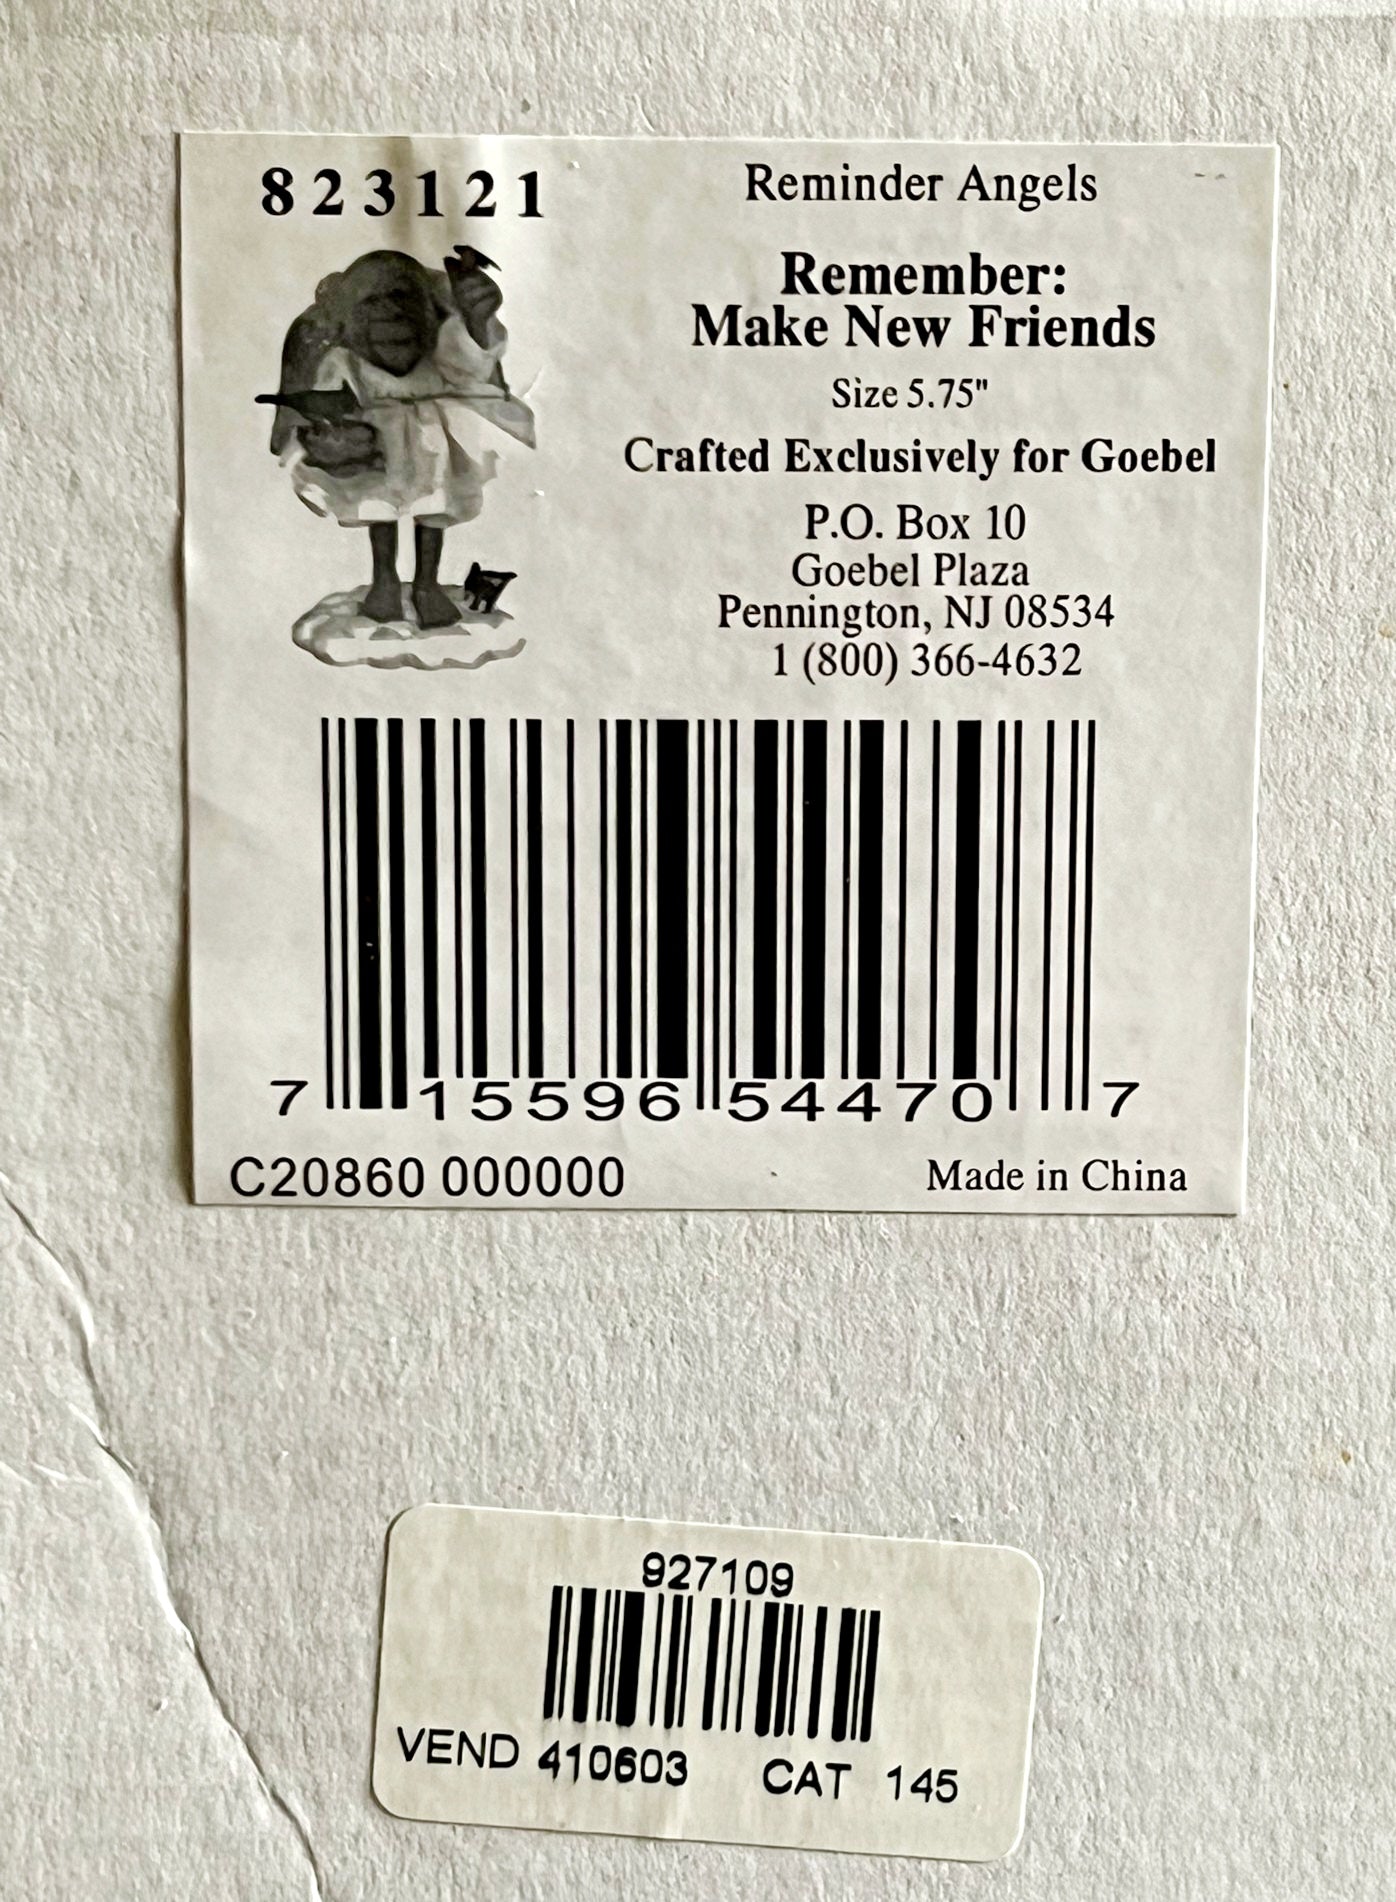 New *Goebel Reminder Angel "Remember Make New Friends" w/ Box #823121